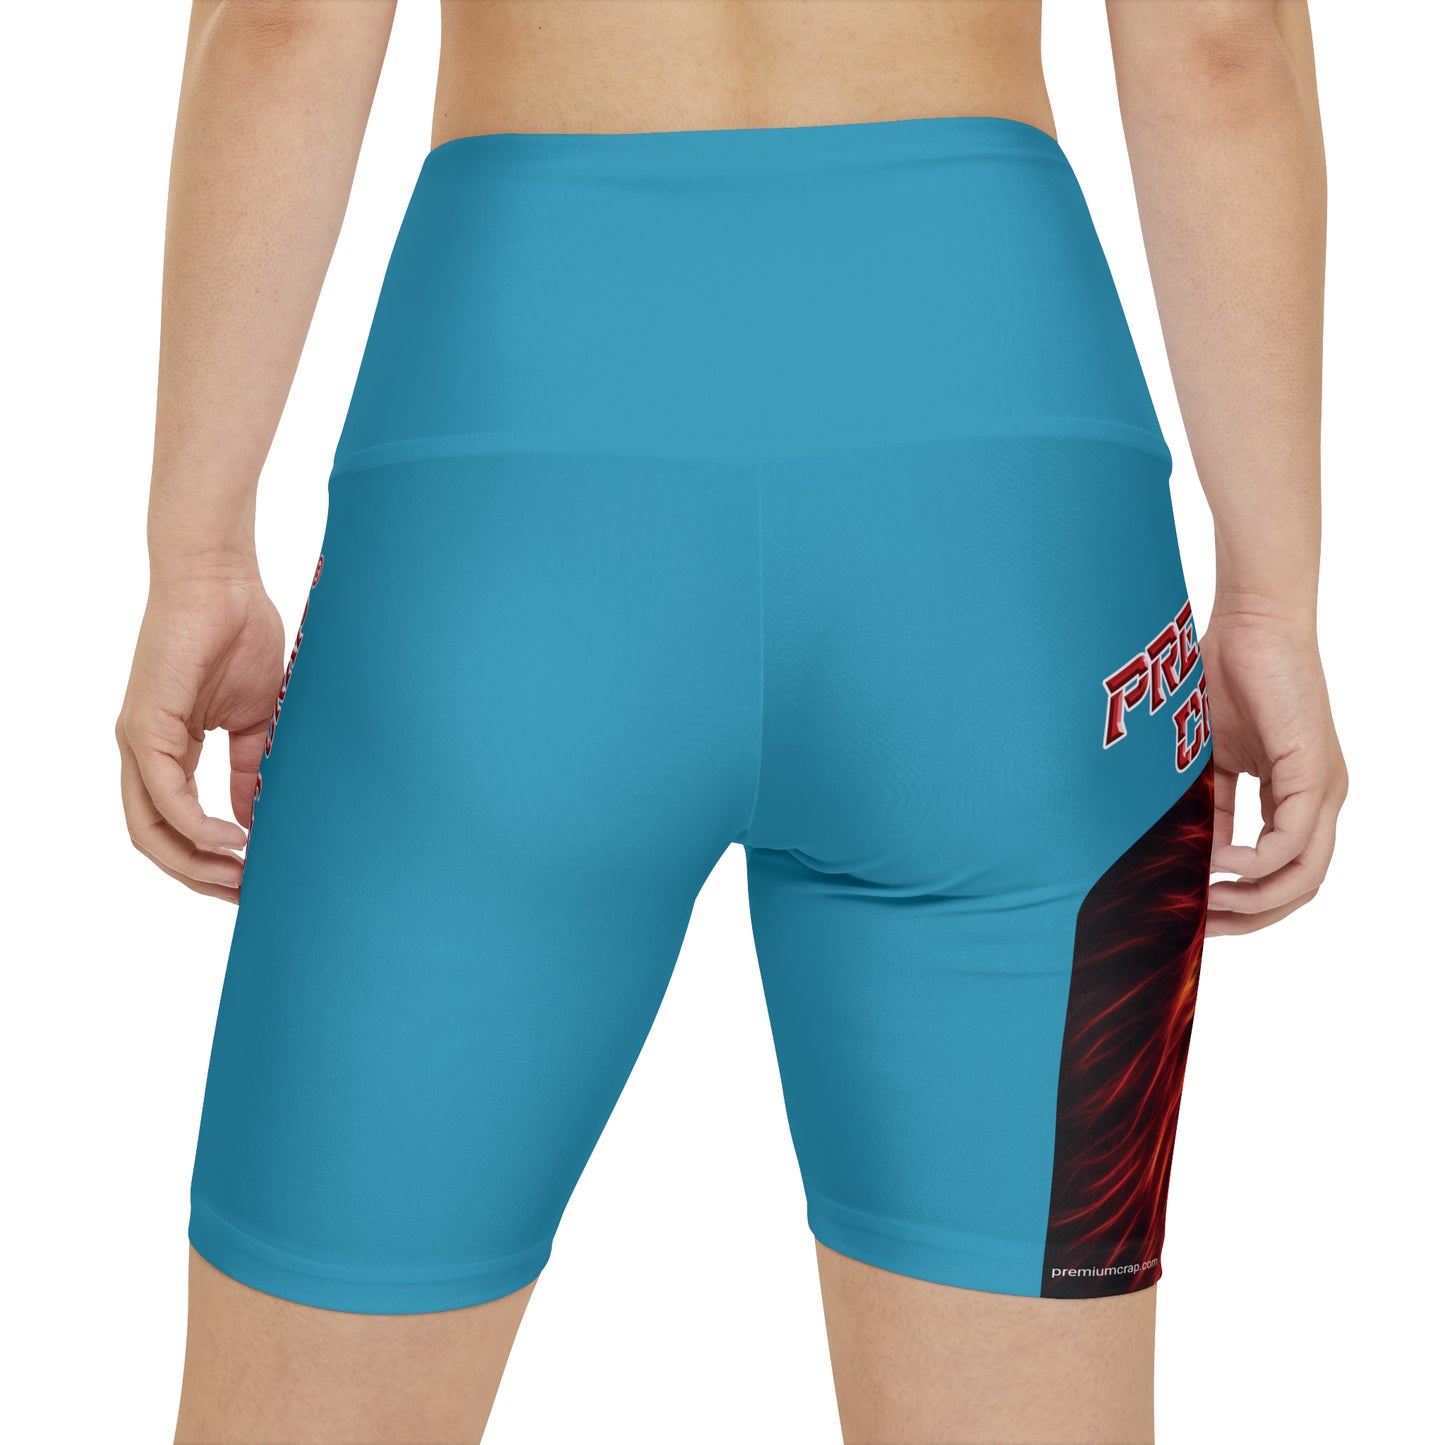 Premium Crap WorkoutWit Shorts - Turquoise